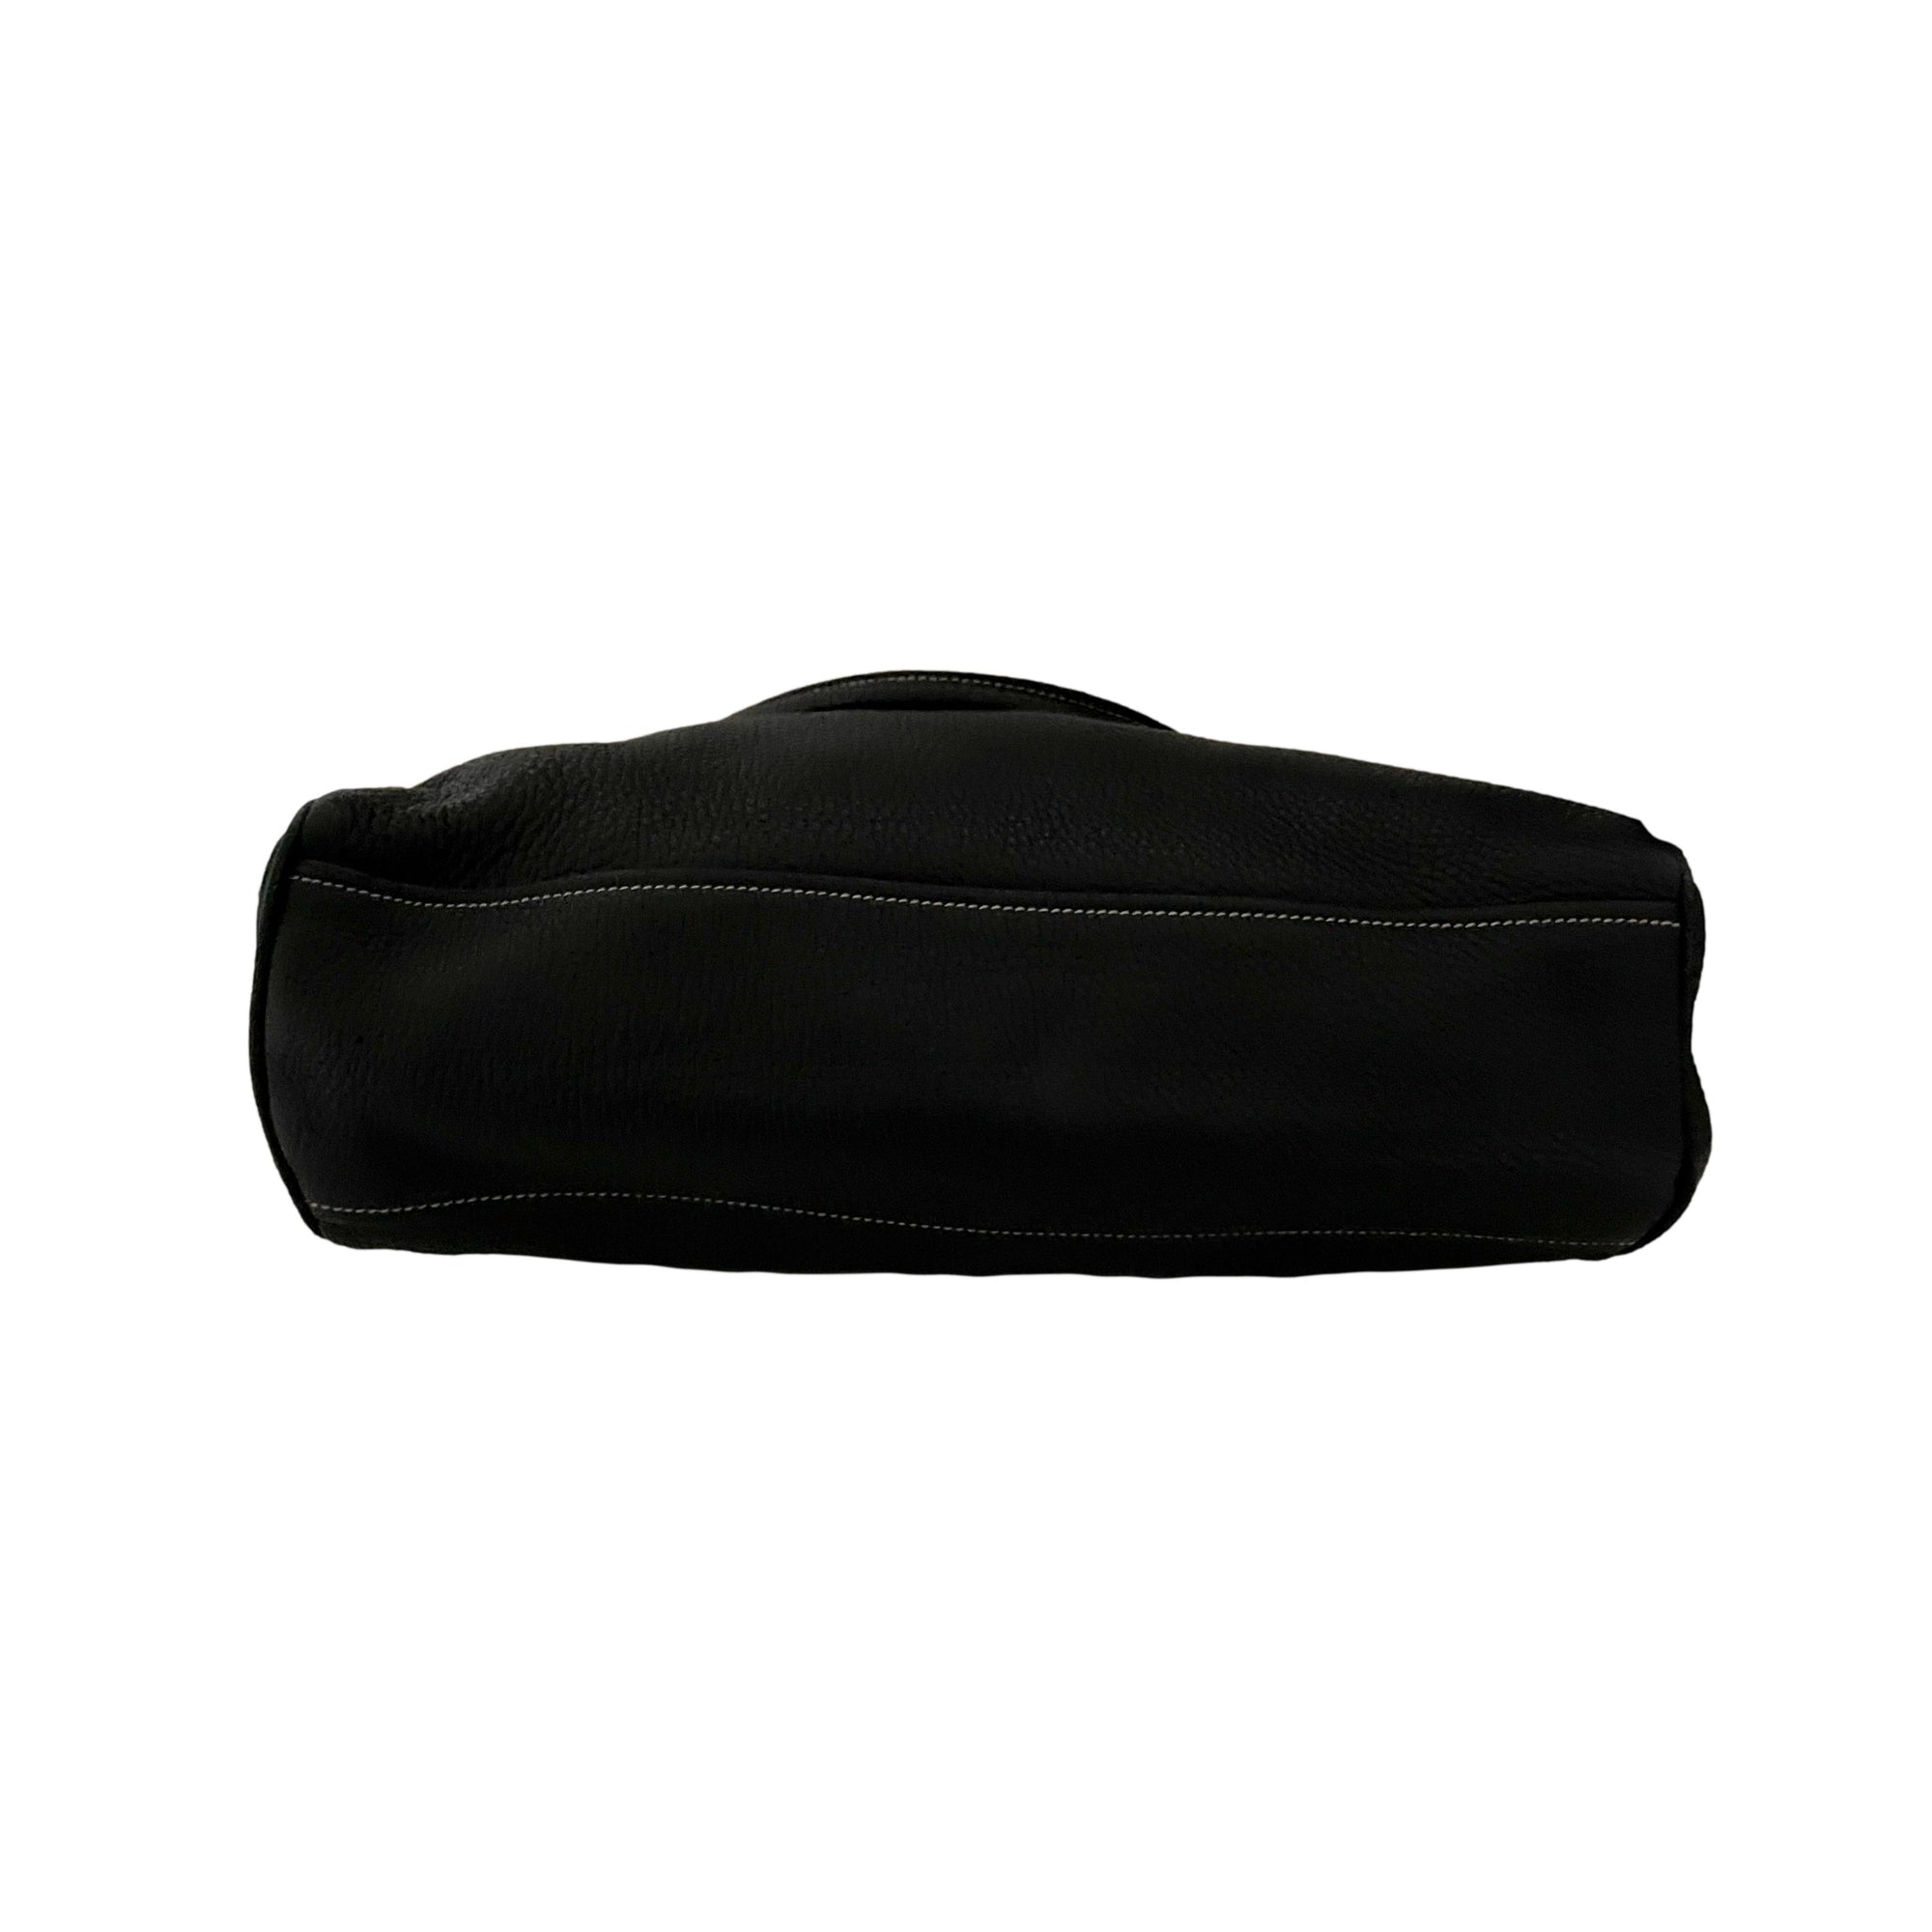 Prada Black Leather Logo Hobo Shoulder Bag - Handbags